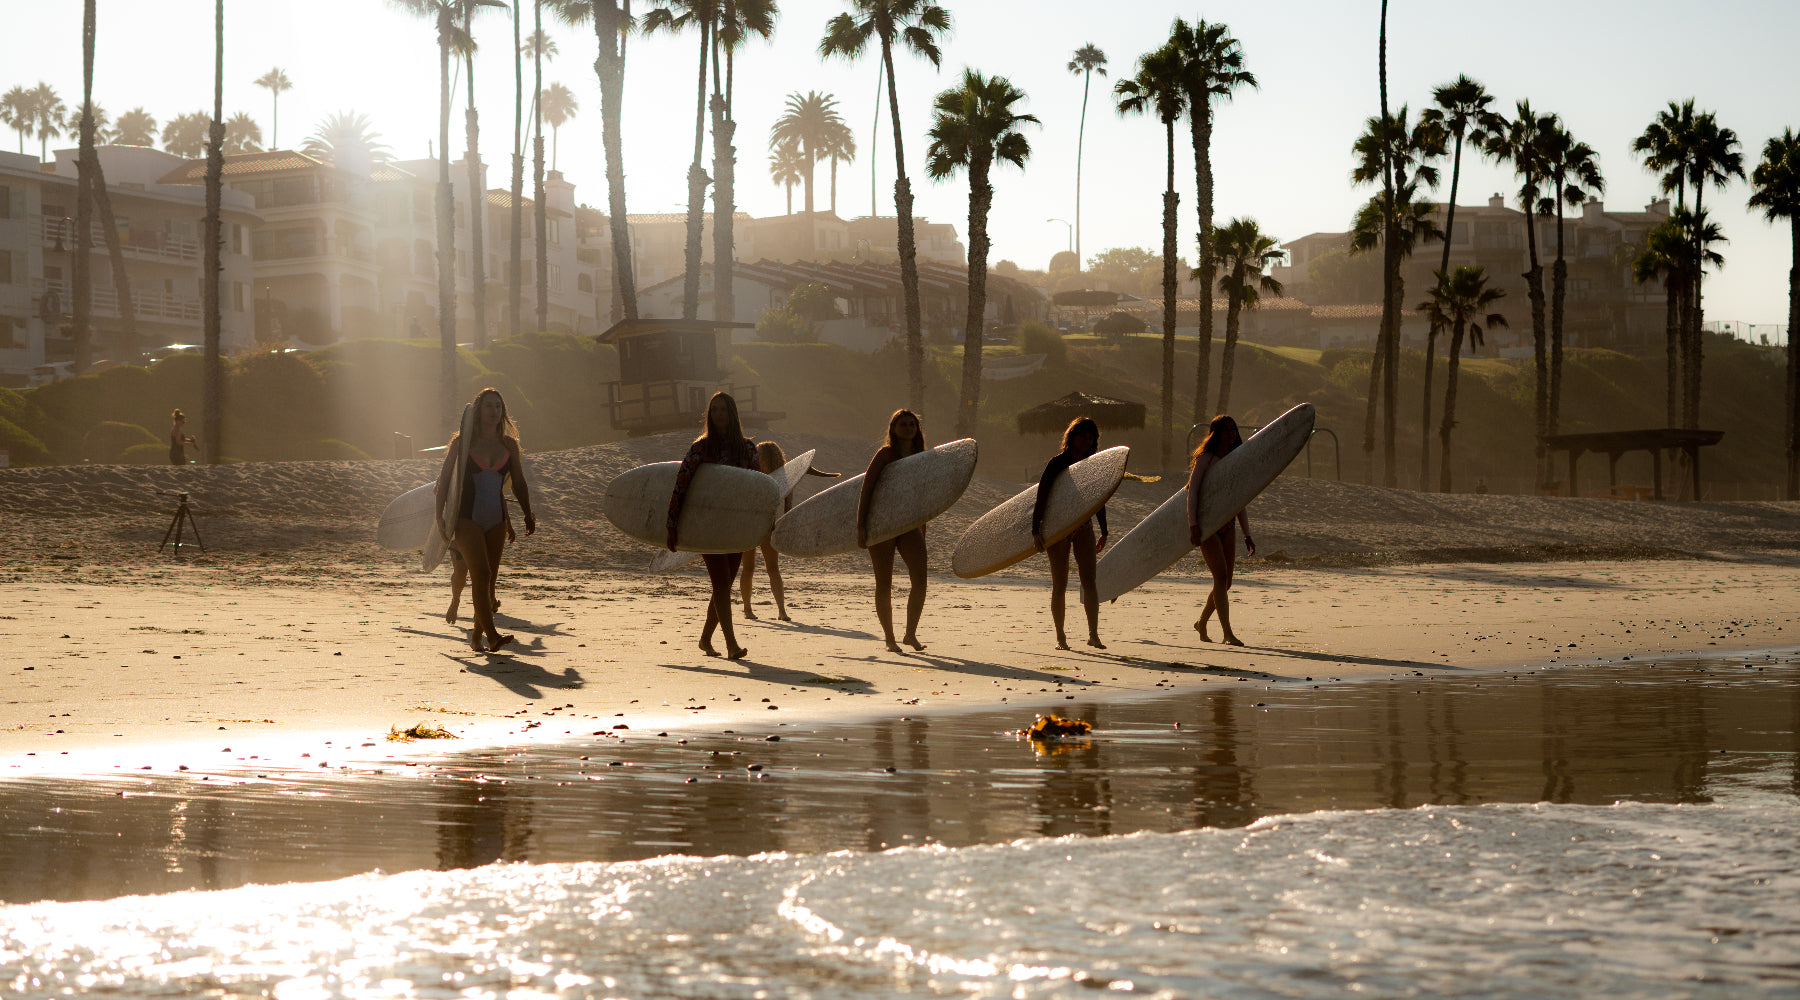 women surfing together